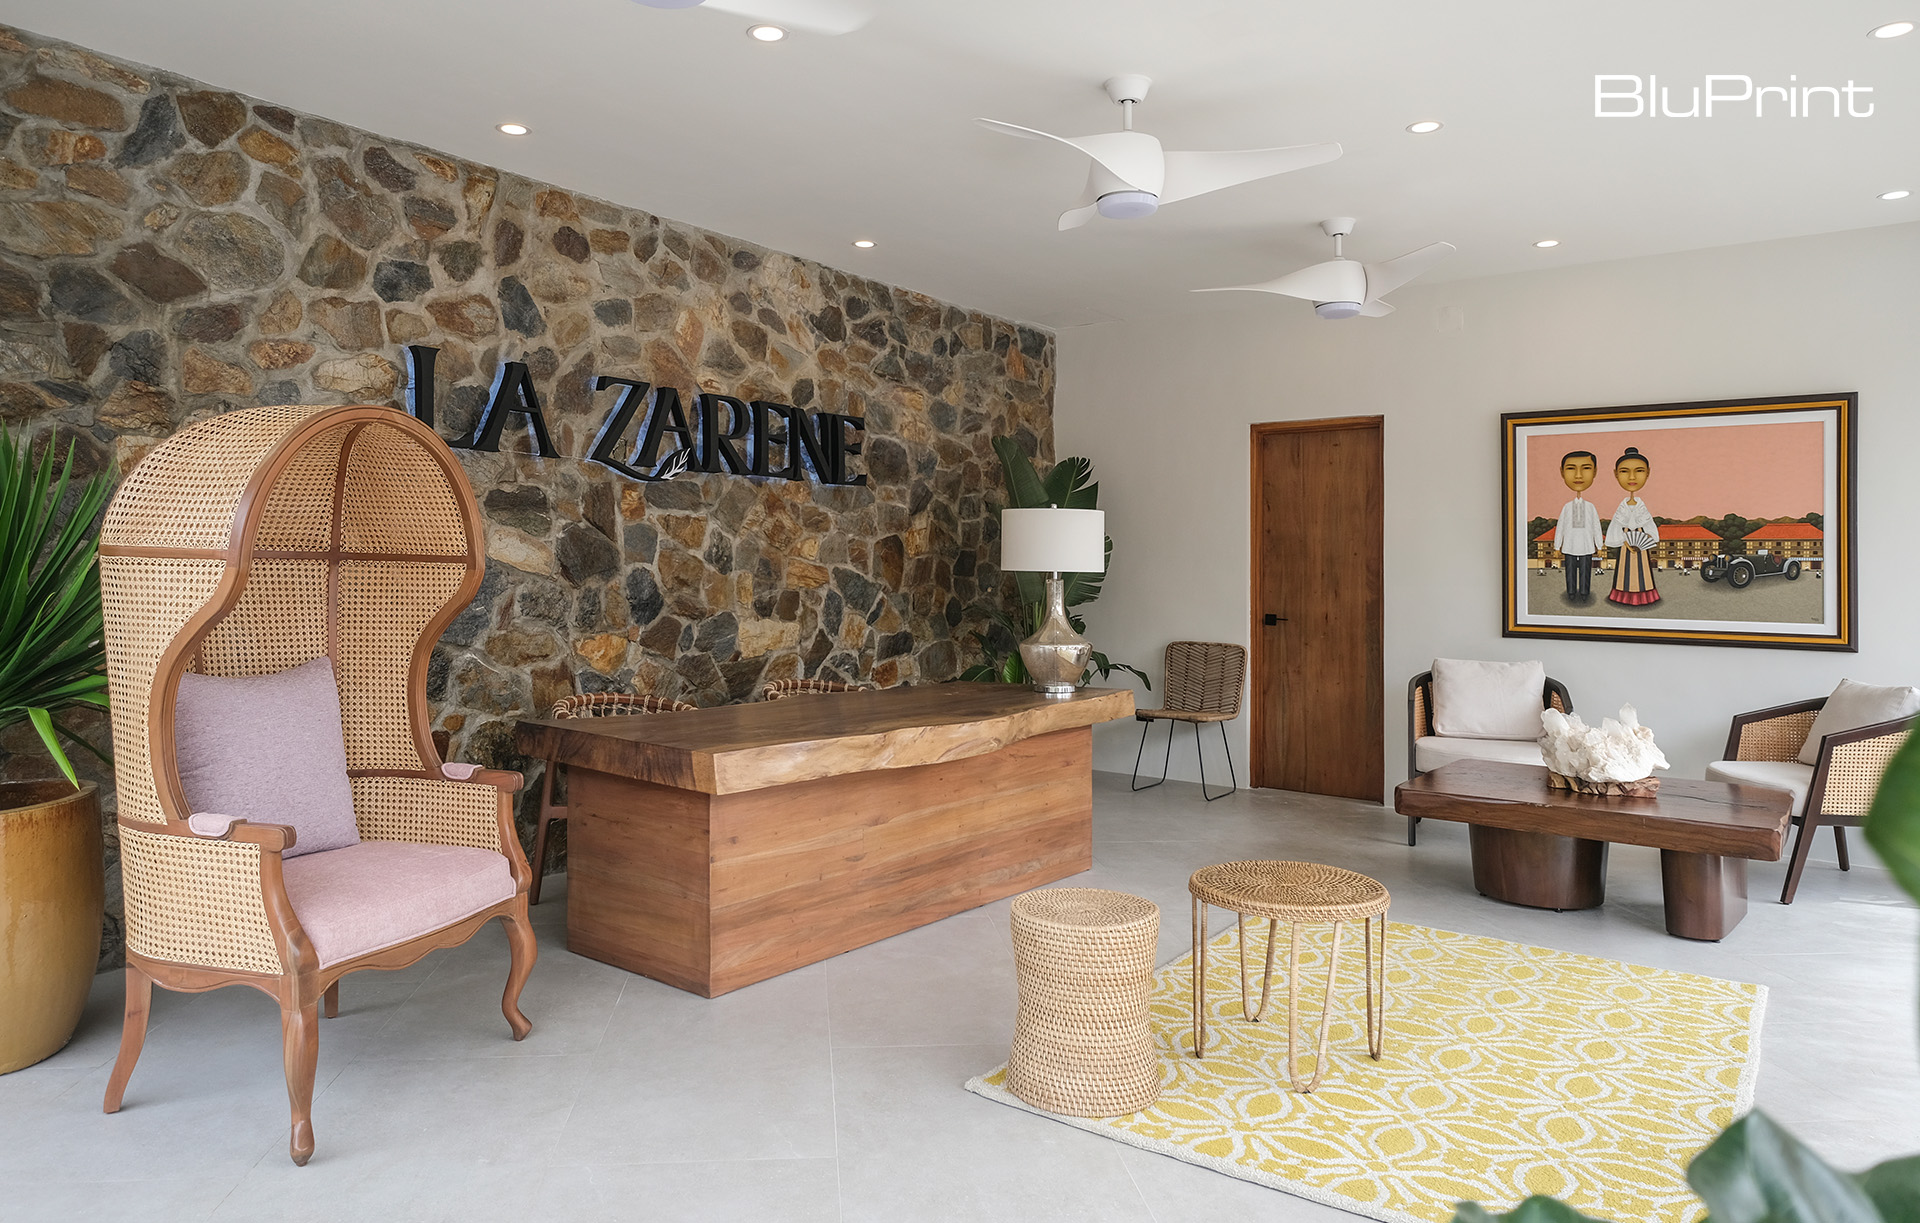 La Zarene's lobby with wood furntiure and rattan and stone fixtures.